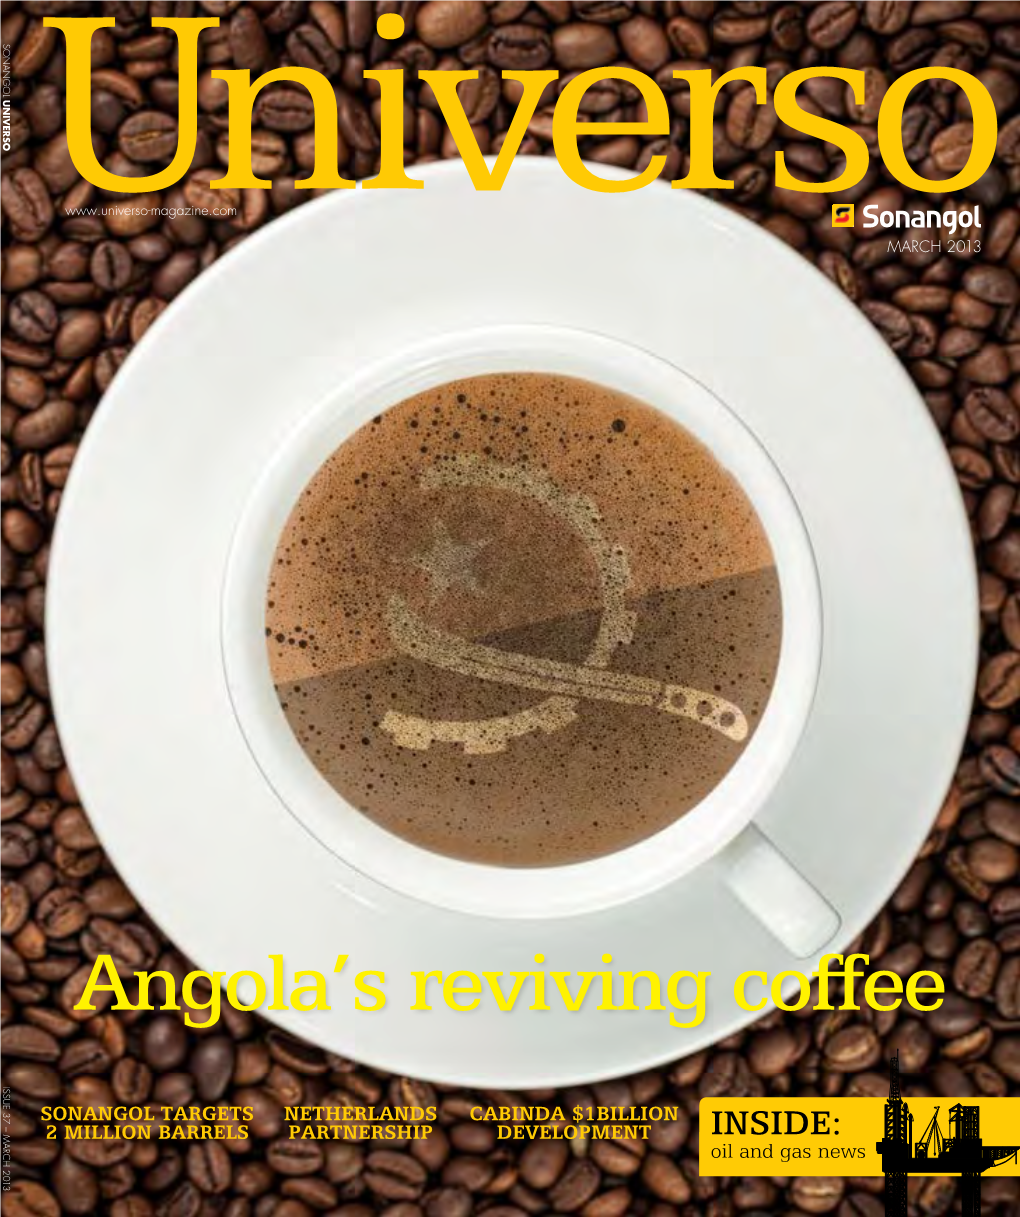 Angola's Reviving Coffee